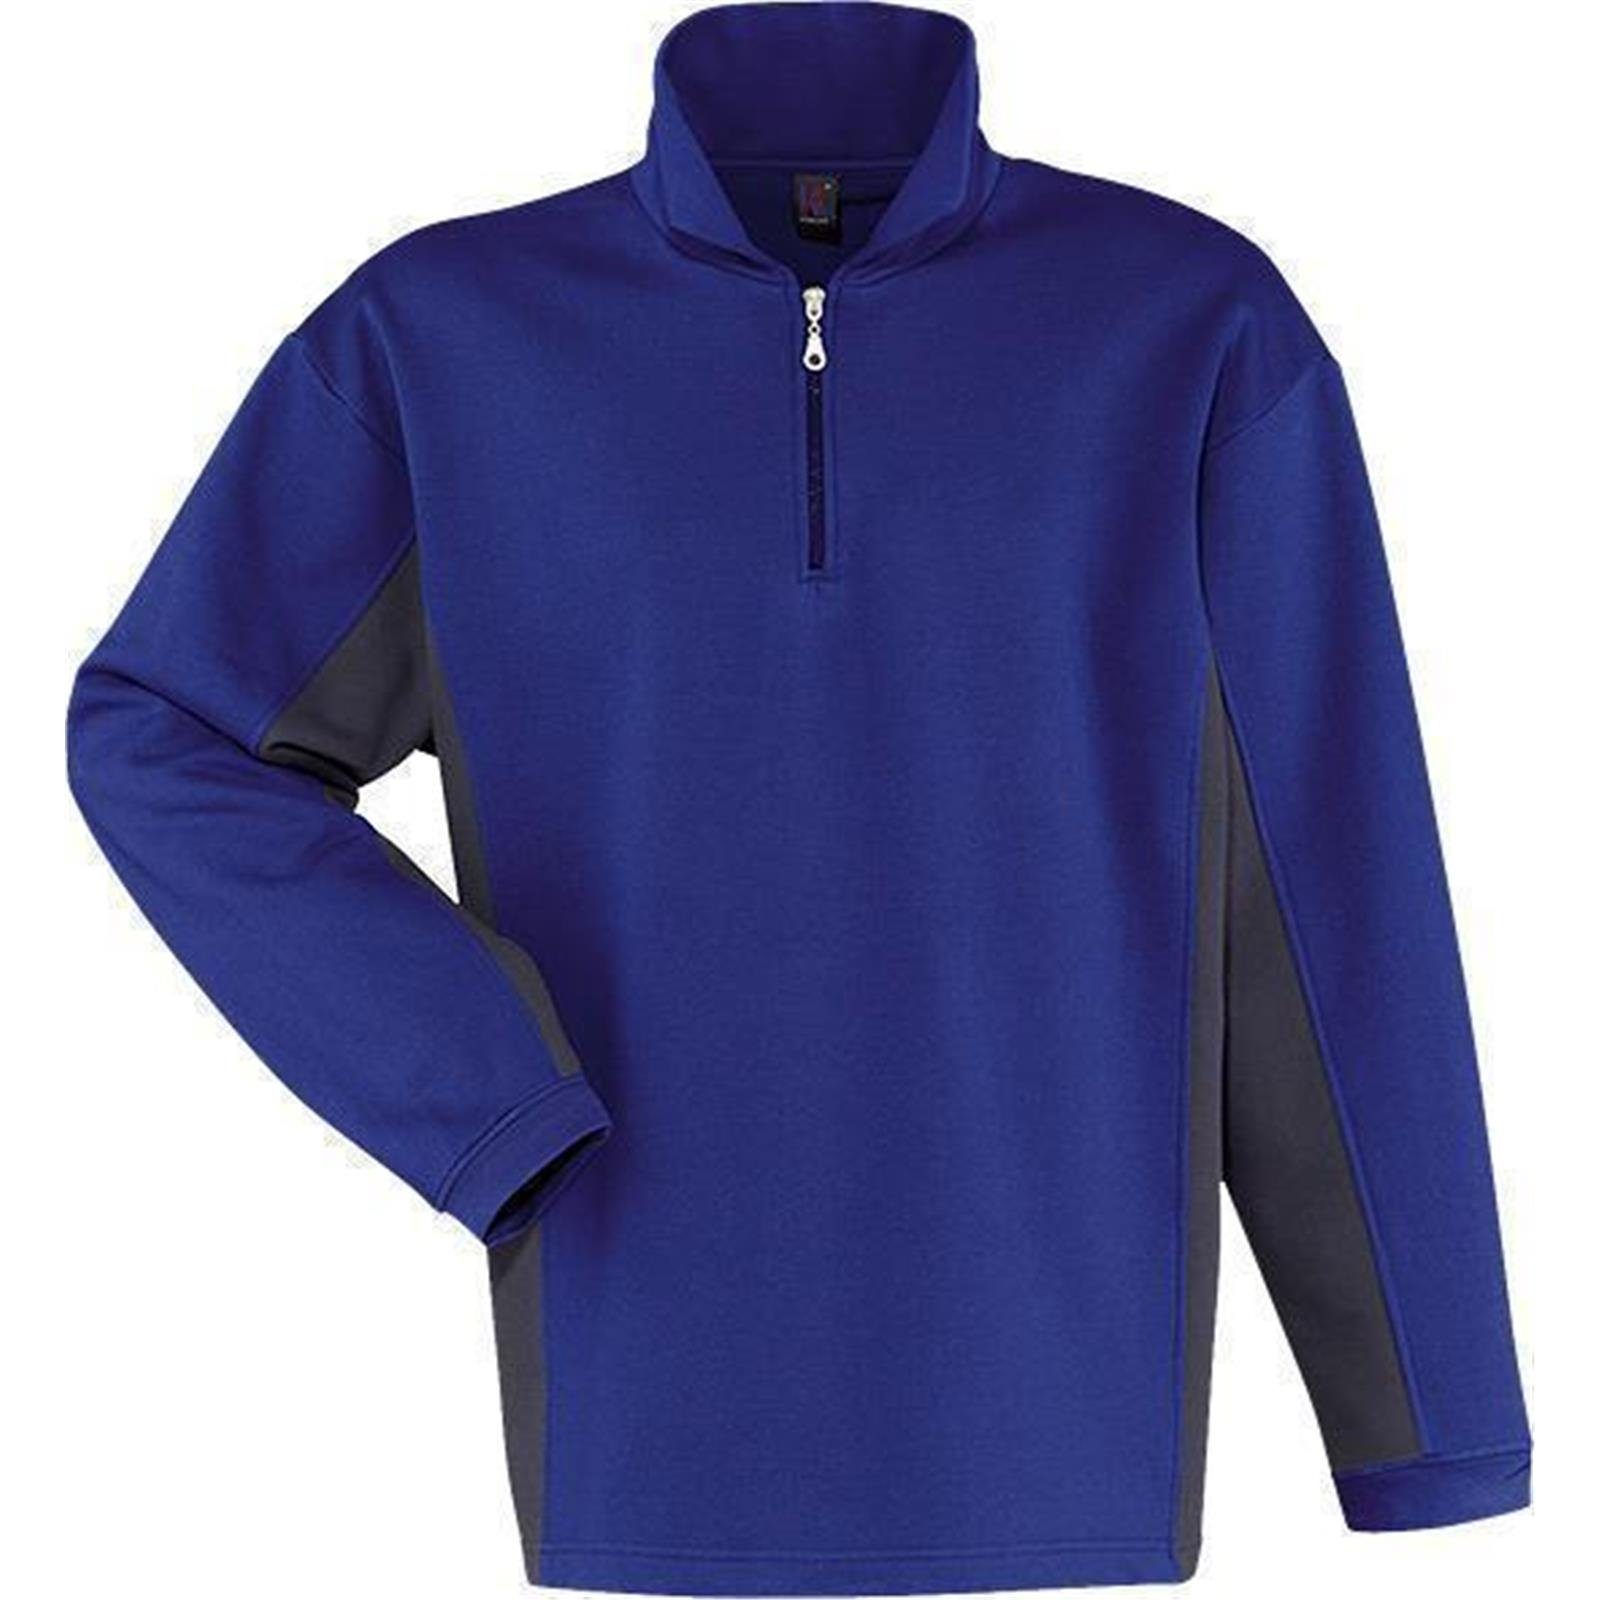 Sweater Kübler Kübler blau/anthrazit Shirt-Dress Sweatshirt